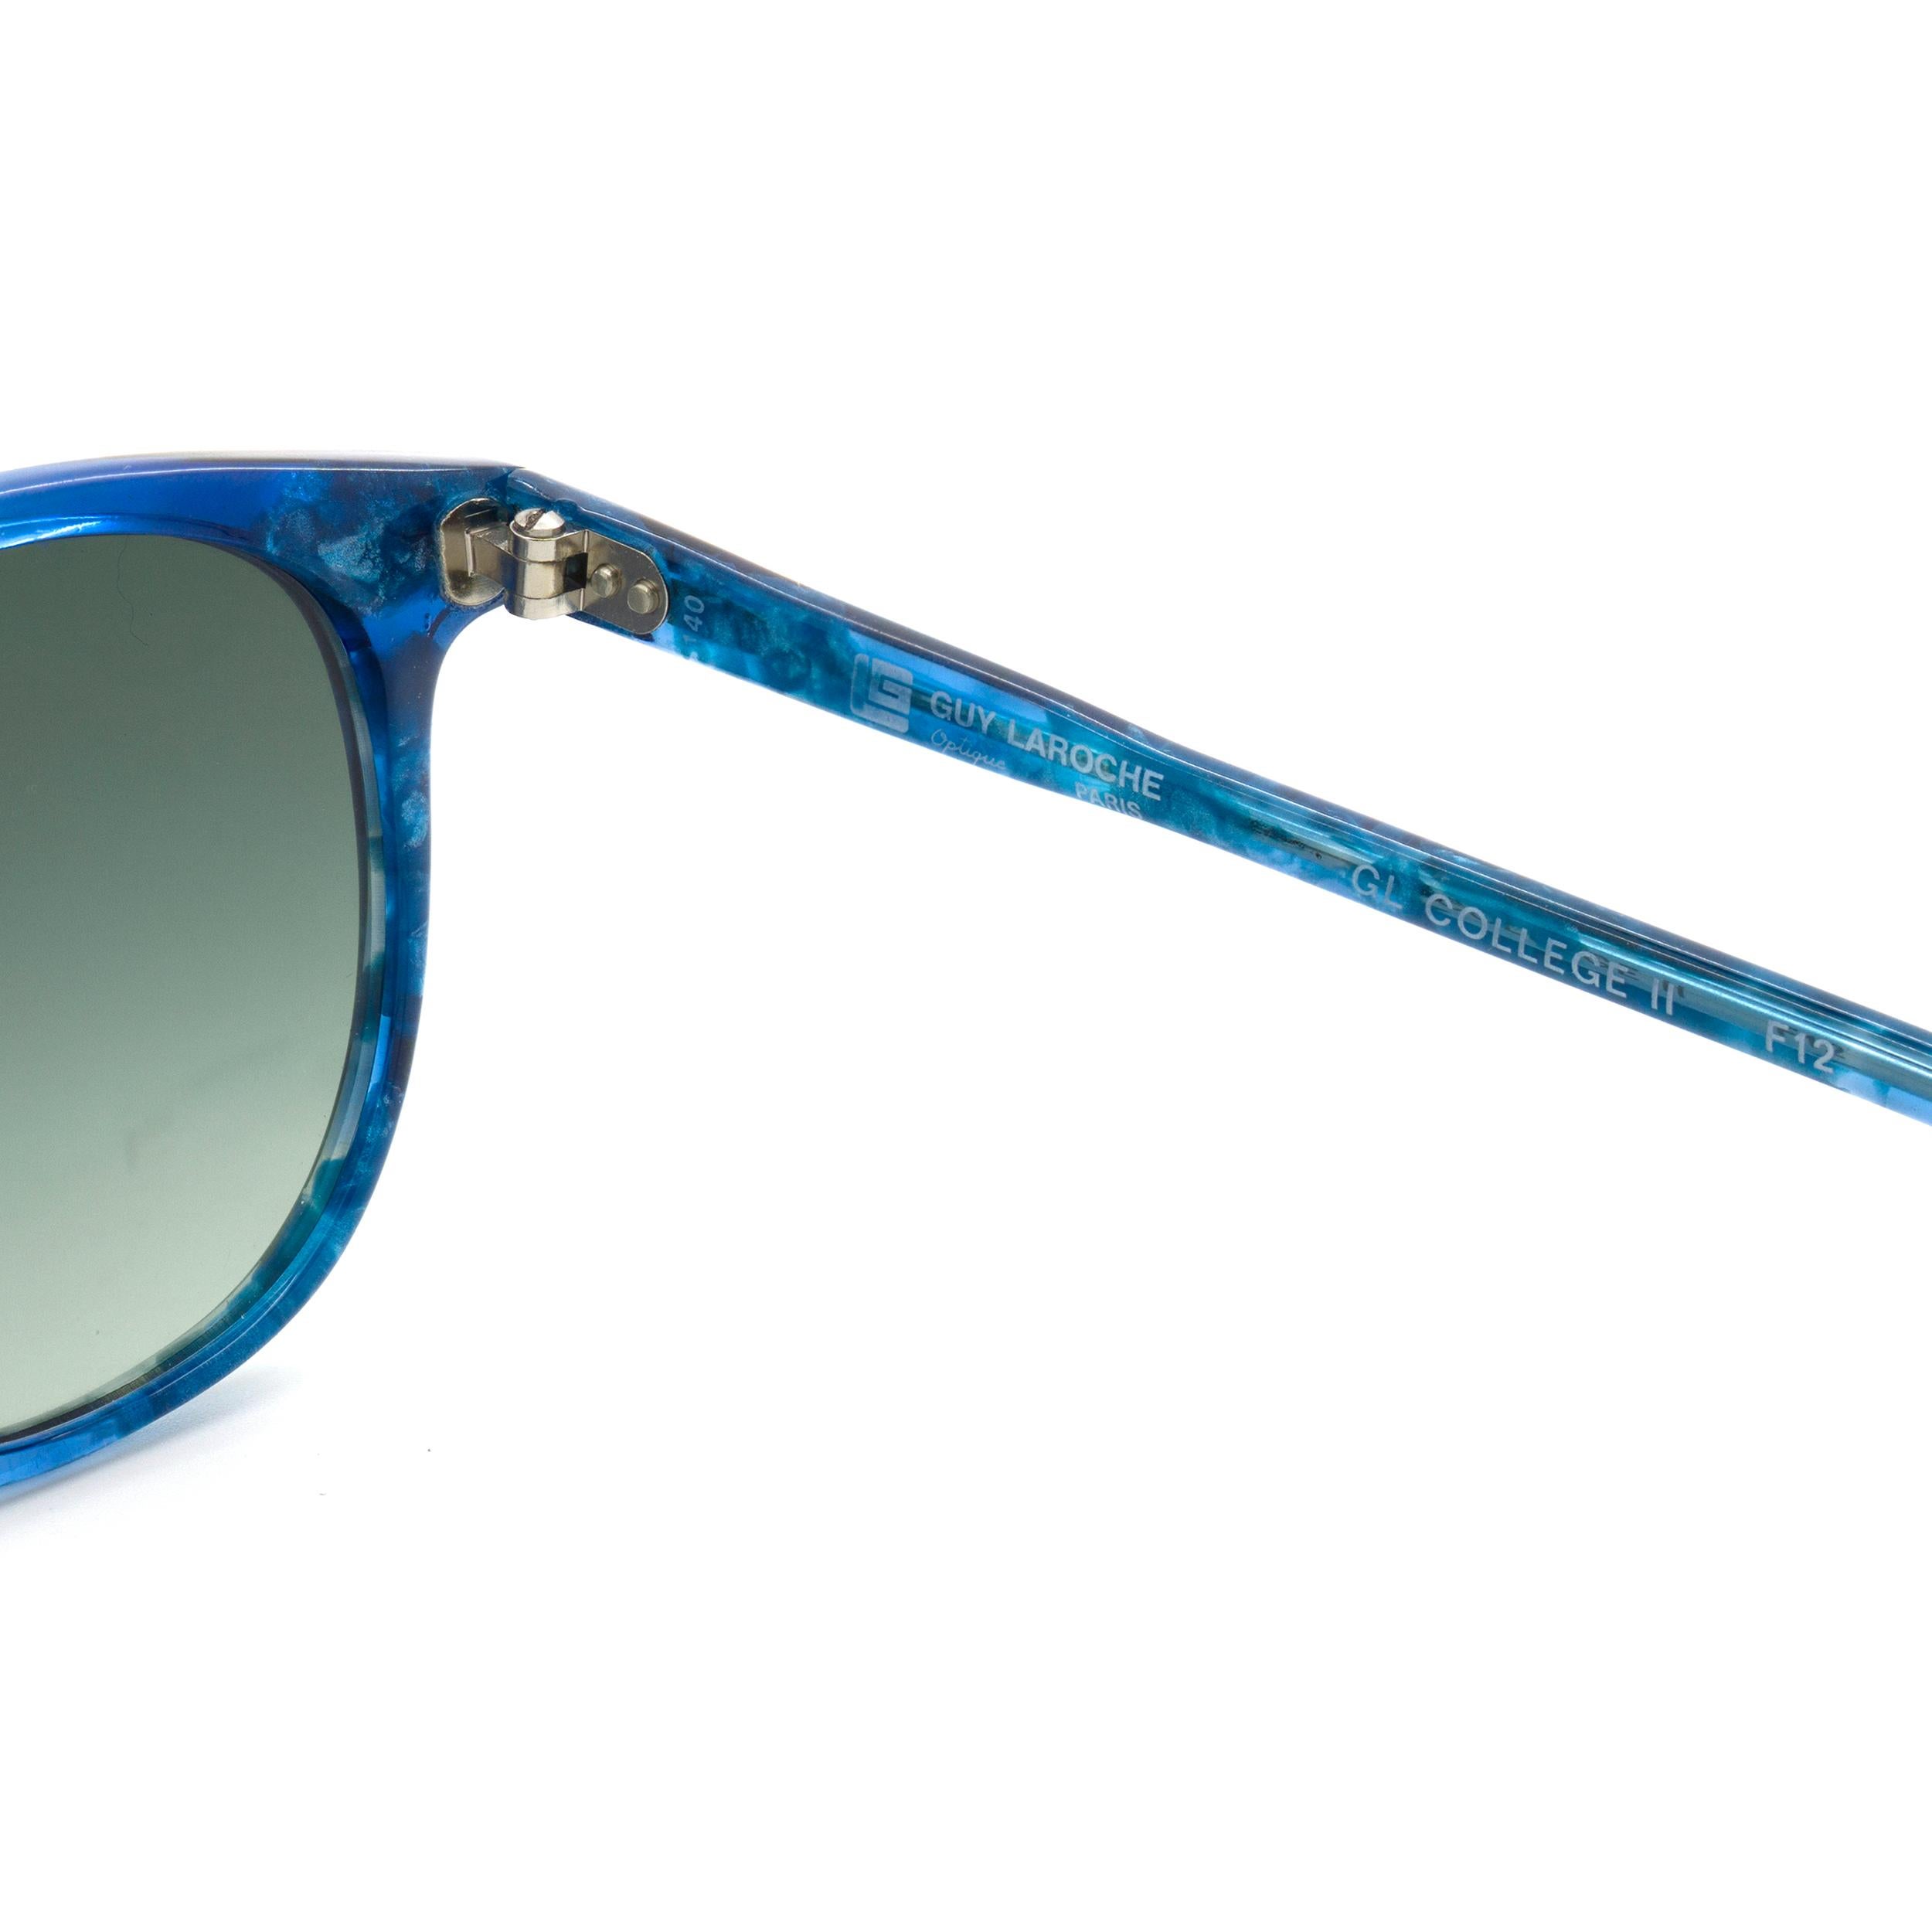 Blue Guy Laroche vintage sunglasses, made in France